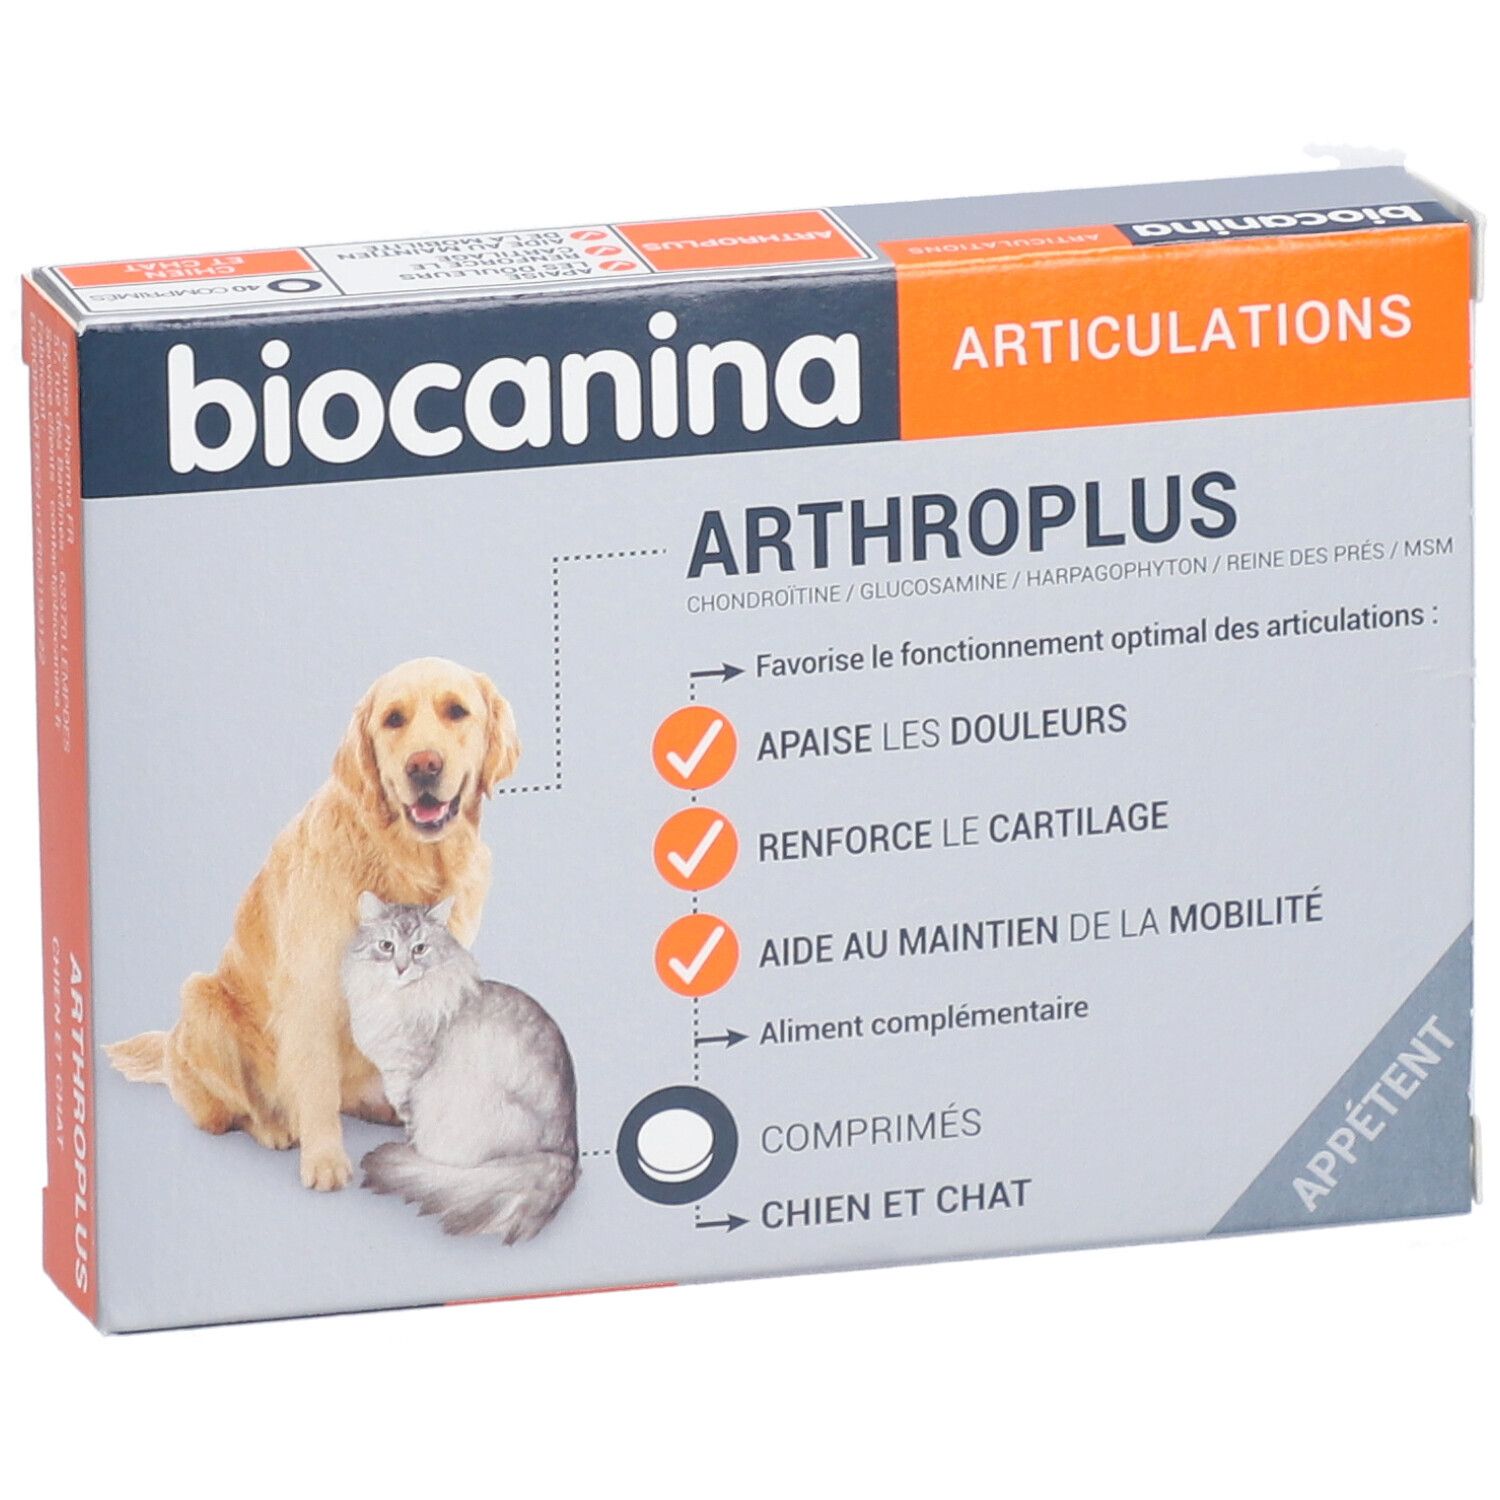 biocanina Arthroplus